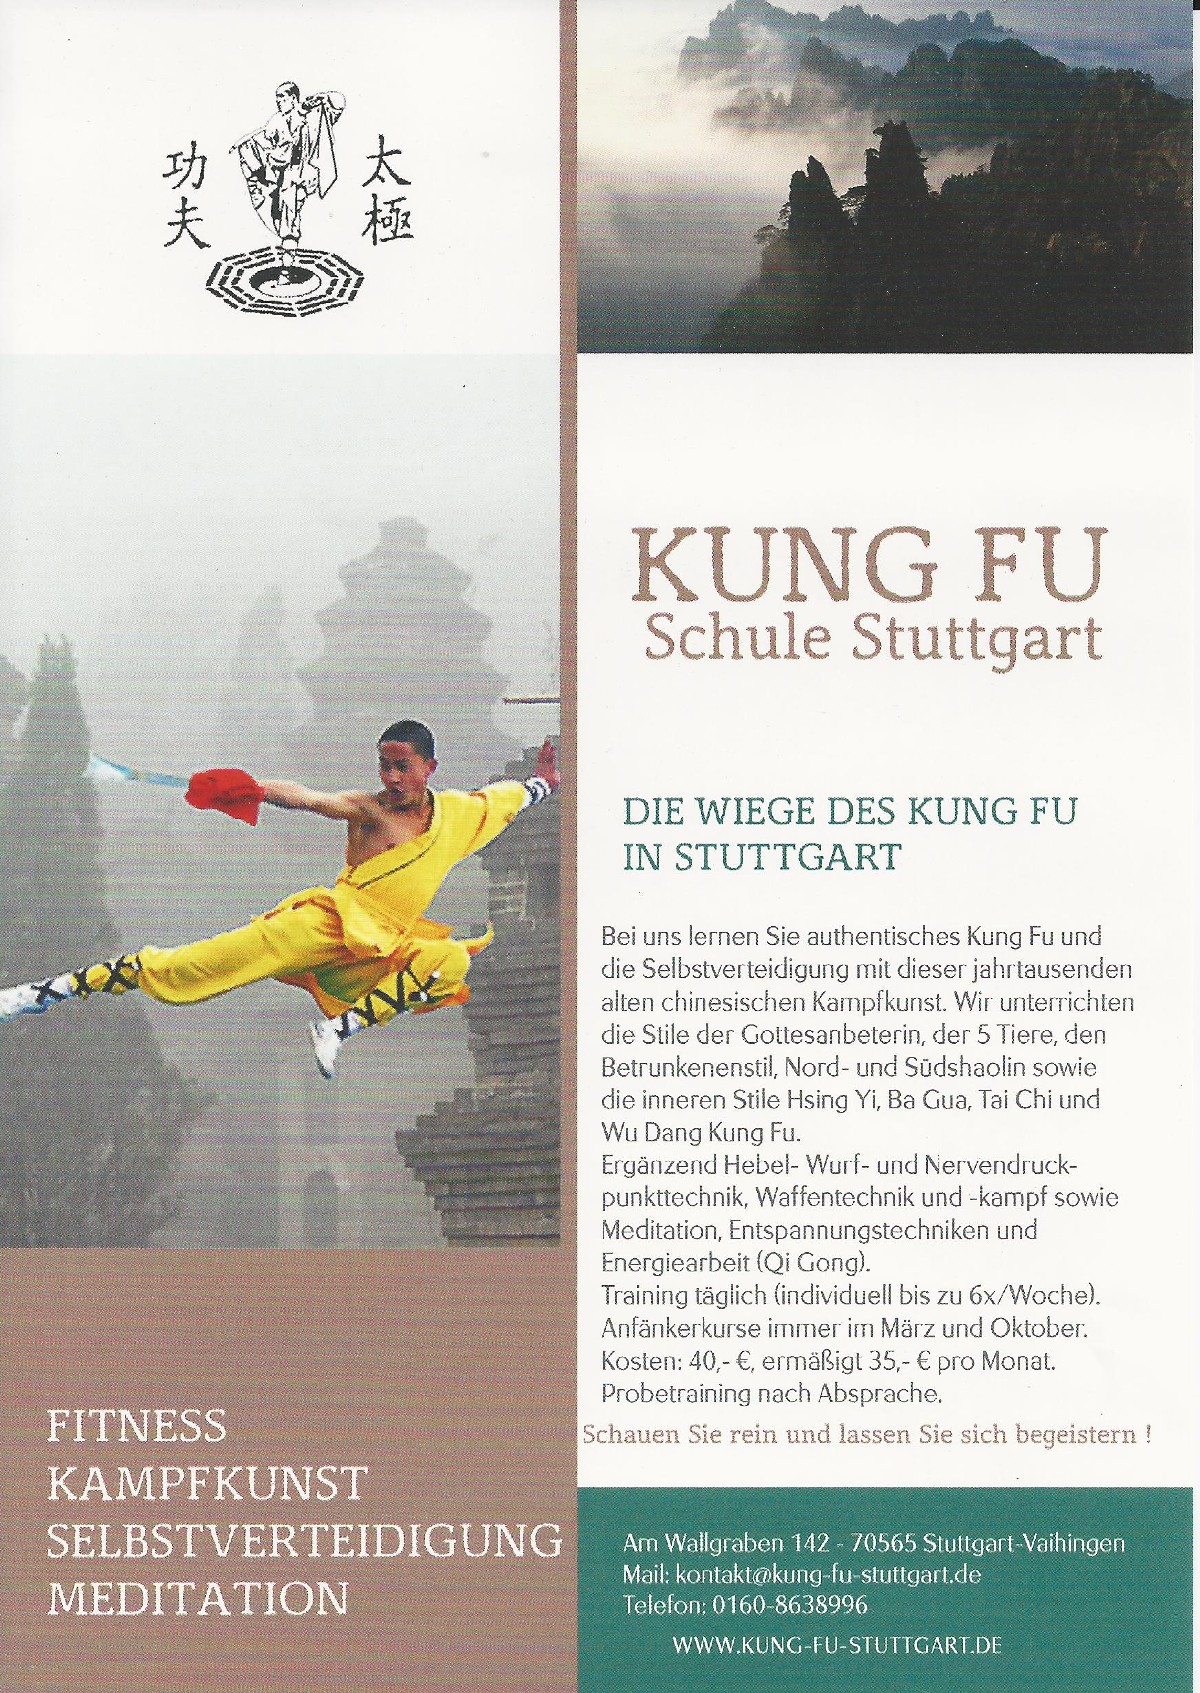 Kung-Fu Schule Stuttgart